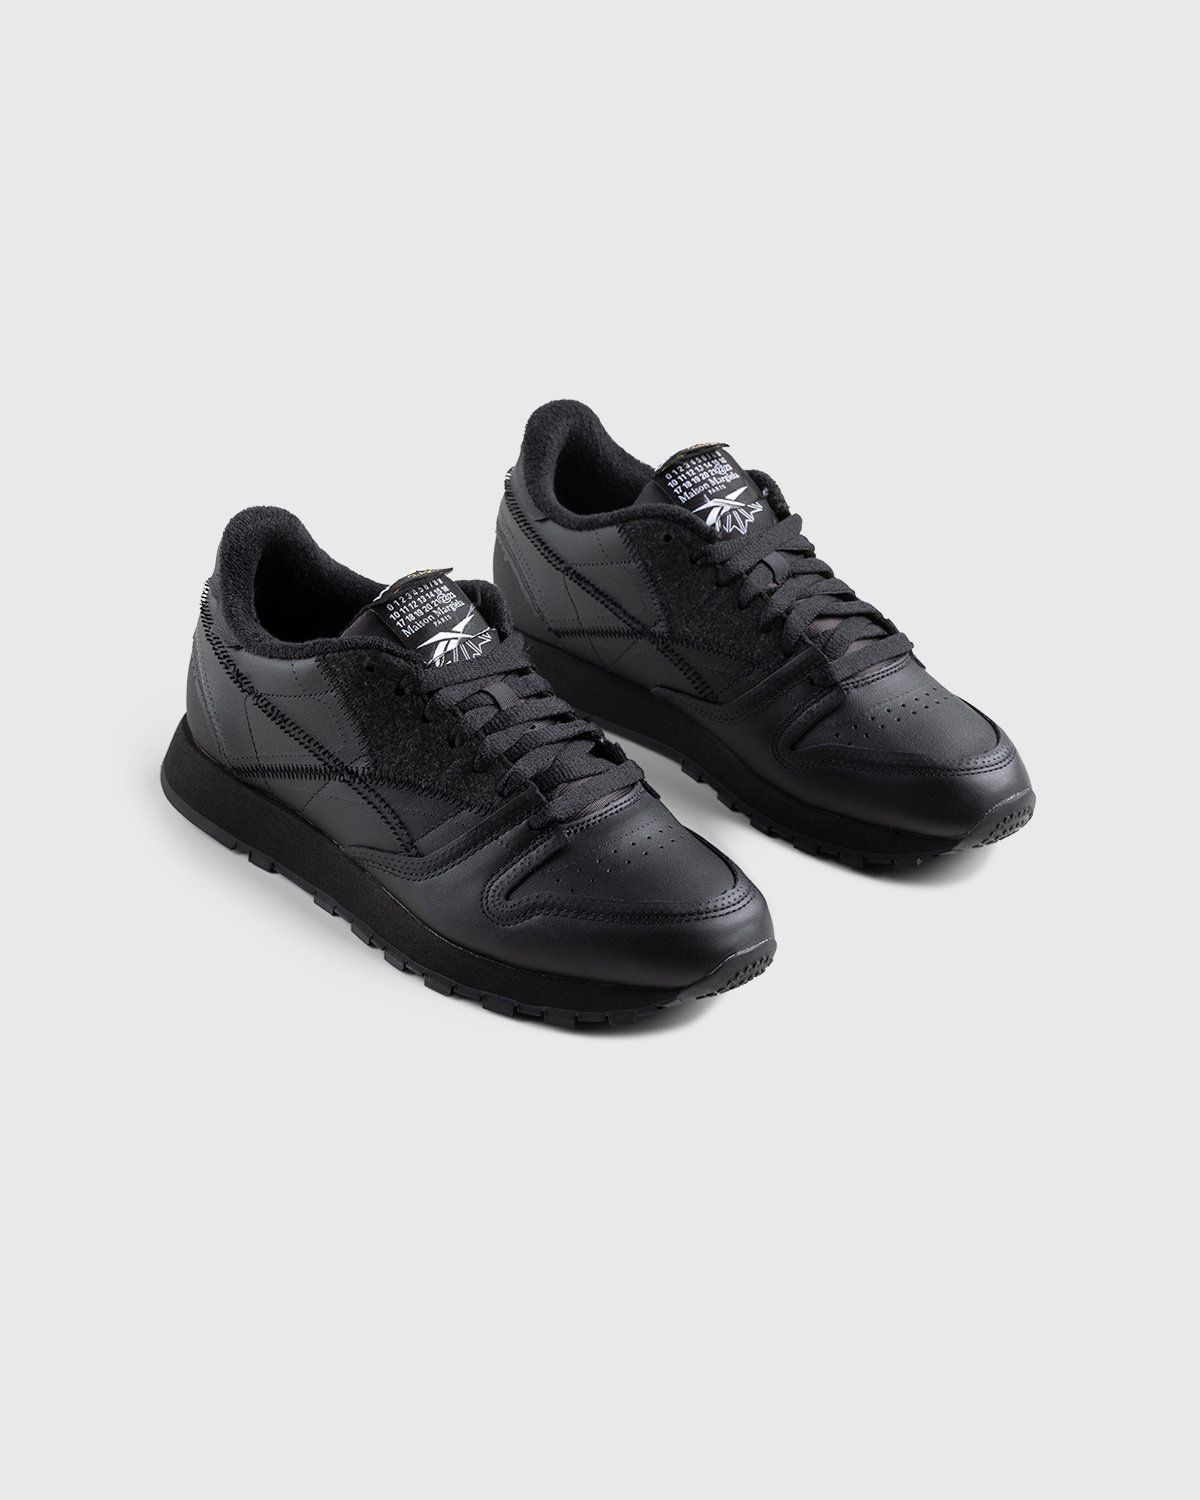 Maison Margiela x Reebok – Classic Leather Memory Of Black/Footwear White/Black - Low Top Sneakers - Black - Image 4